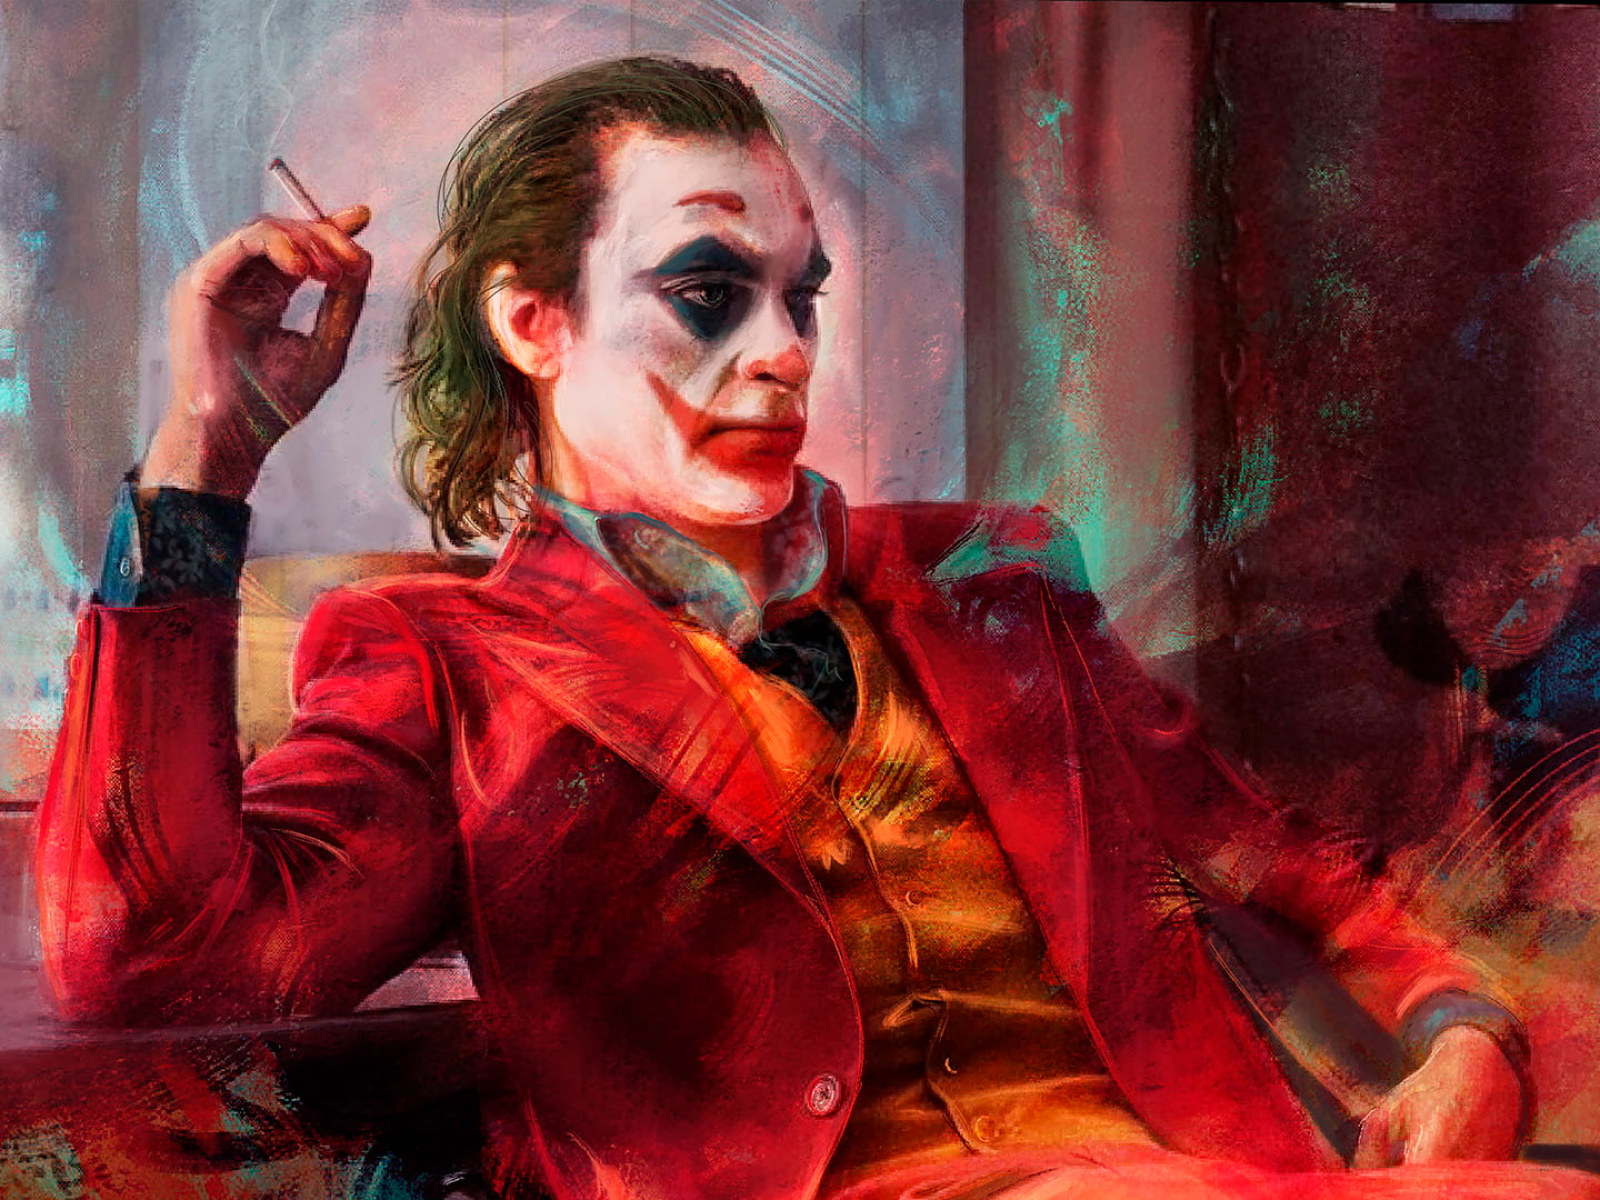 Joker Dc Comic Digital 4K Wallpapers